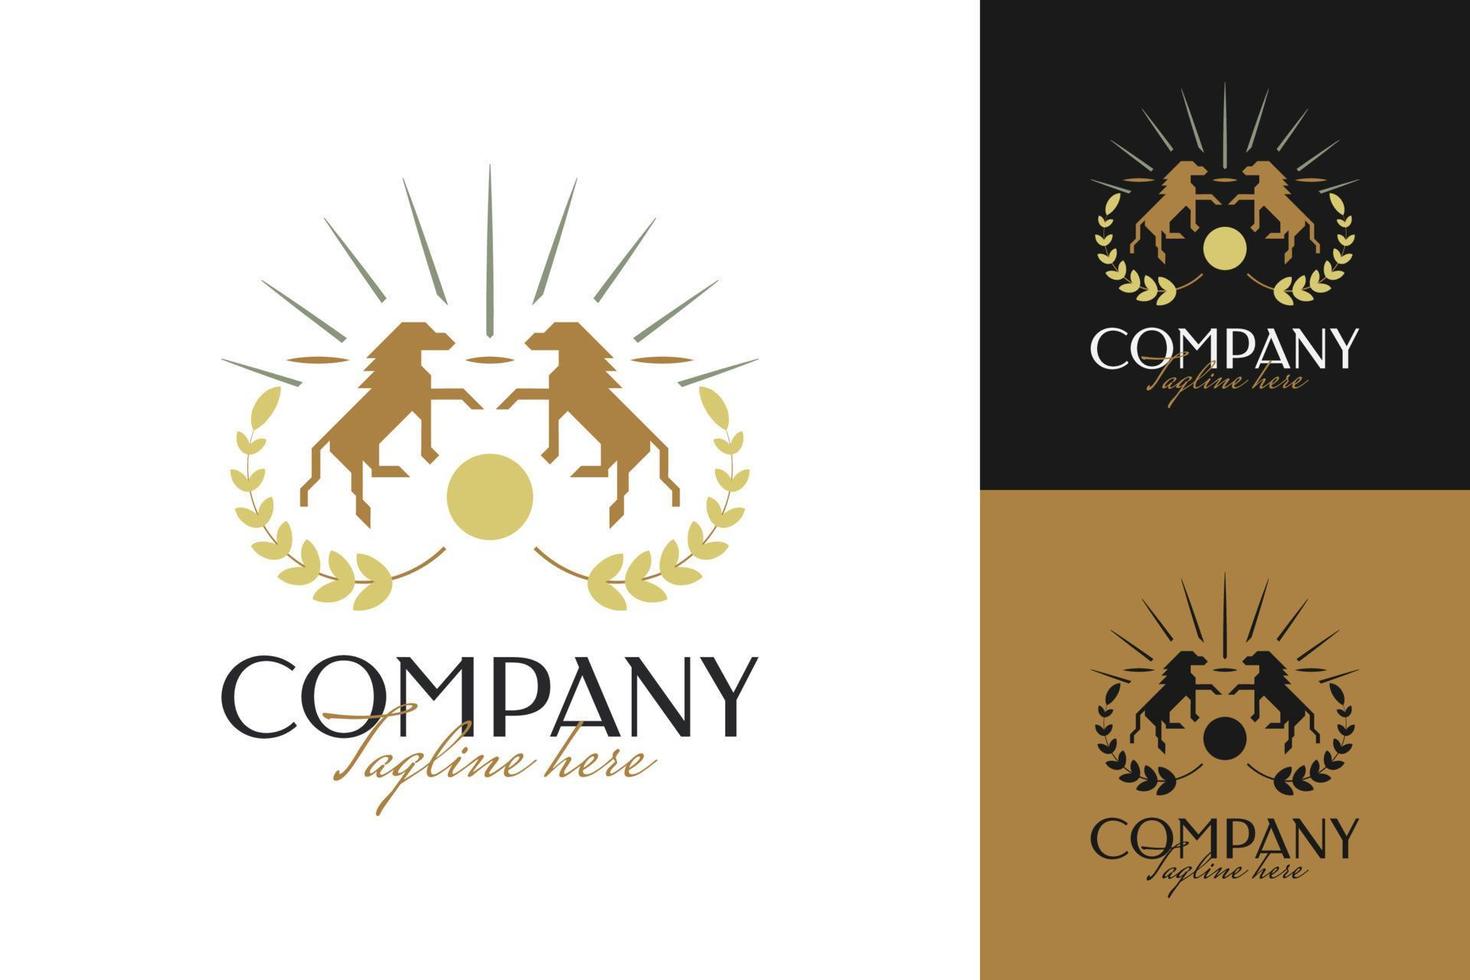 elegante diseño de logotipo de caballo con símbolo de sol y trigo. dos caballos en estilo vintage para logotipo, emblema, insignia o etiqueta vector